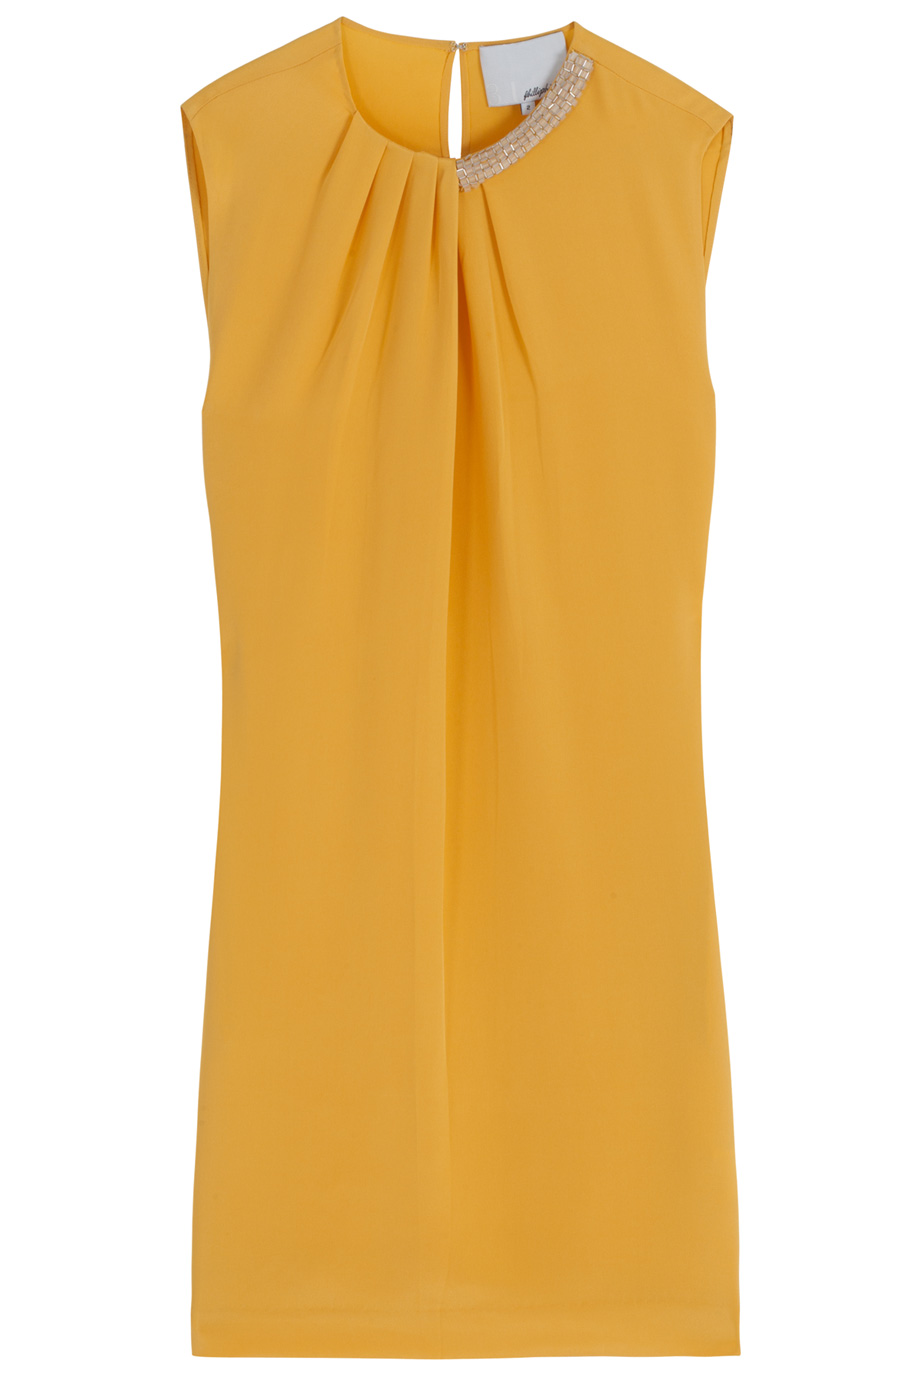 3.1 Phillip Lim Beaded Neck Sleeveless Dress in Yellow - Lyst